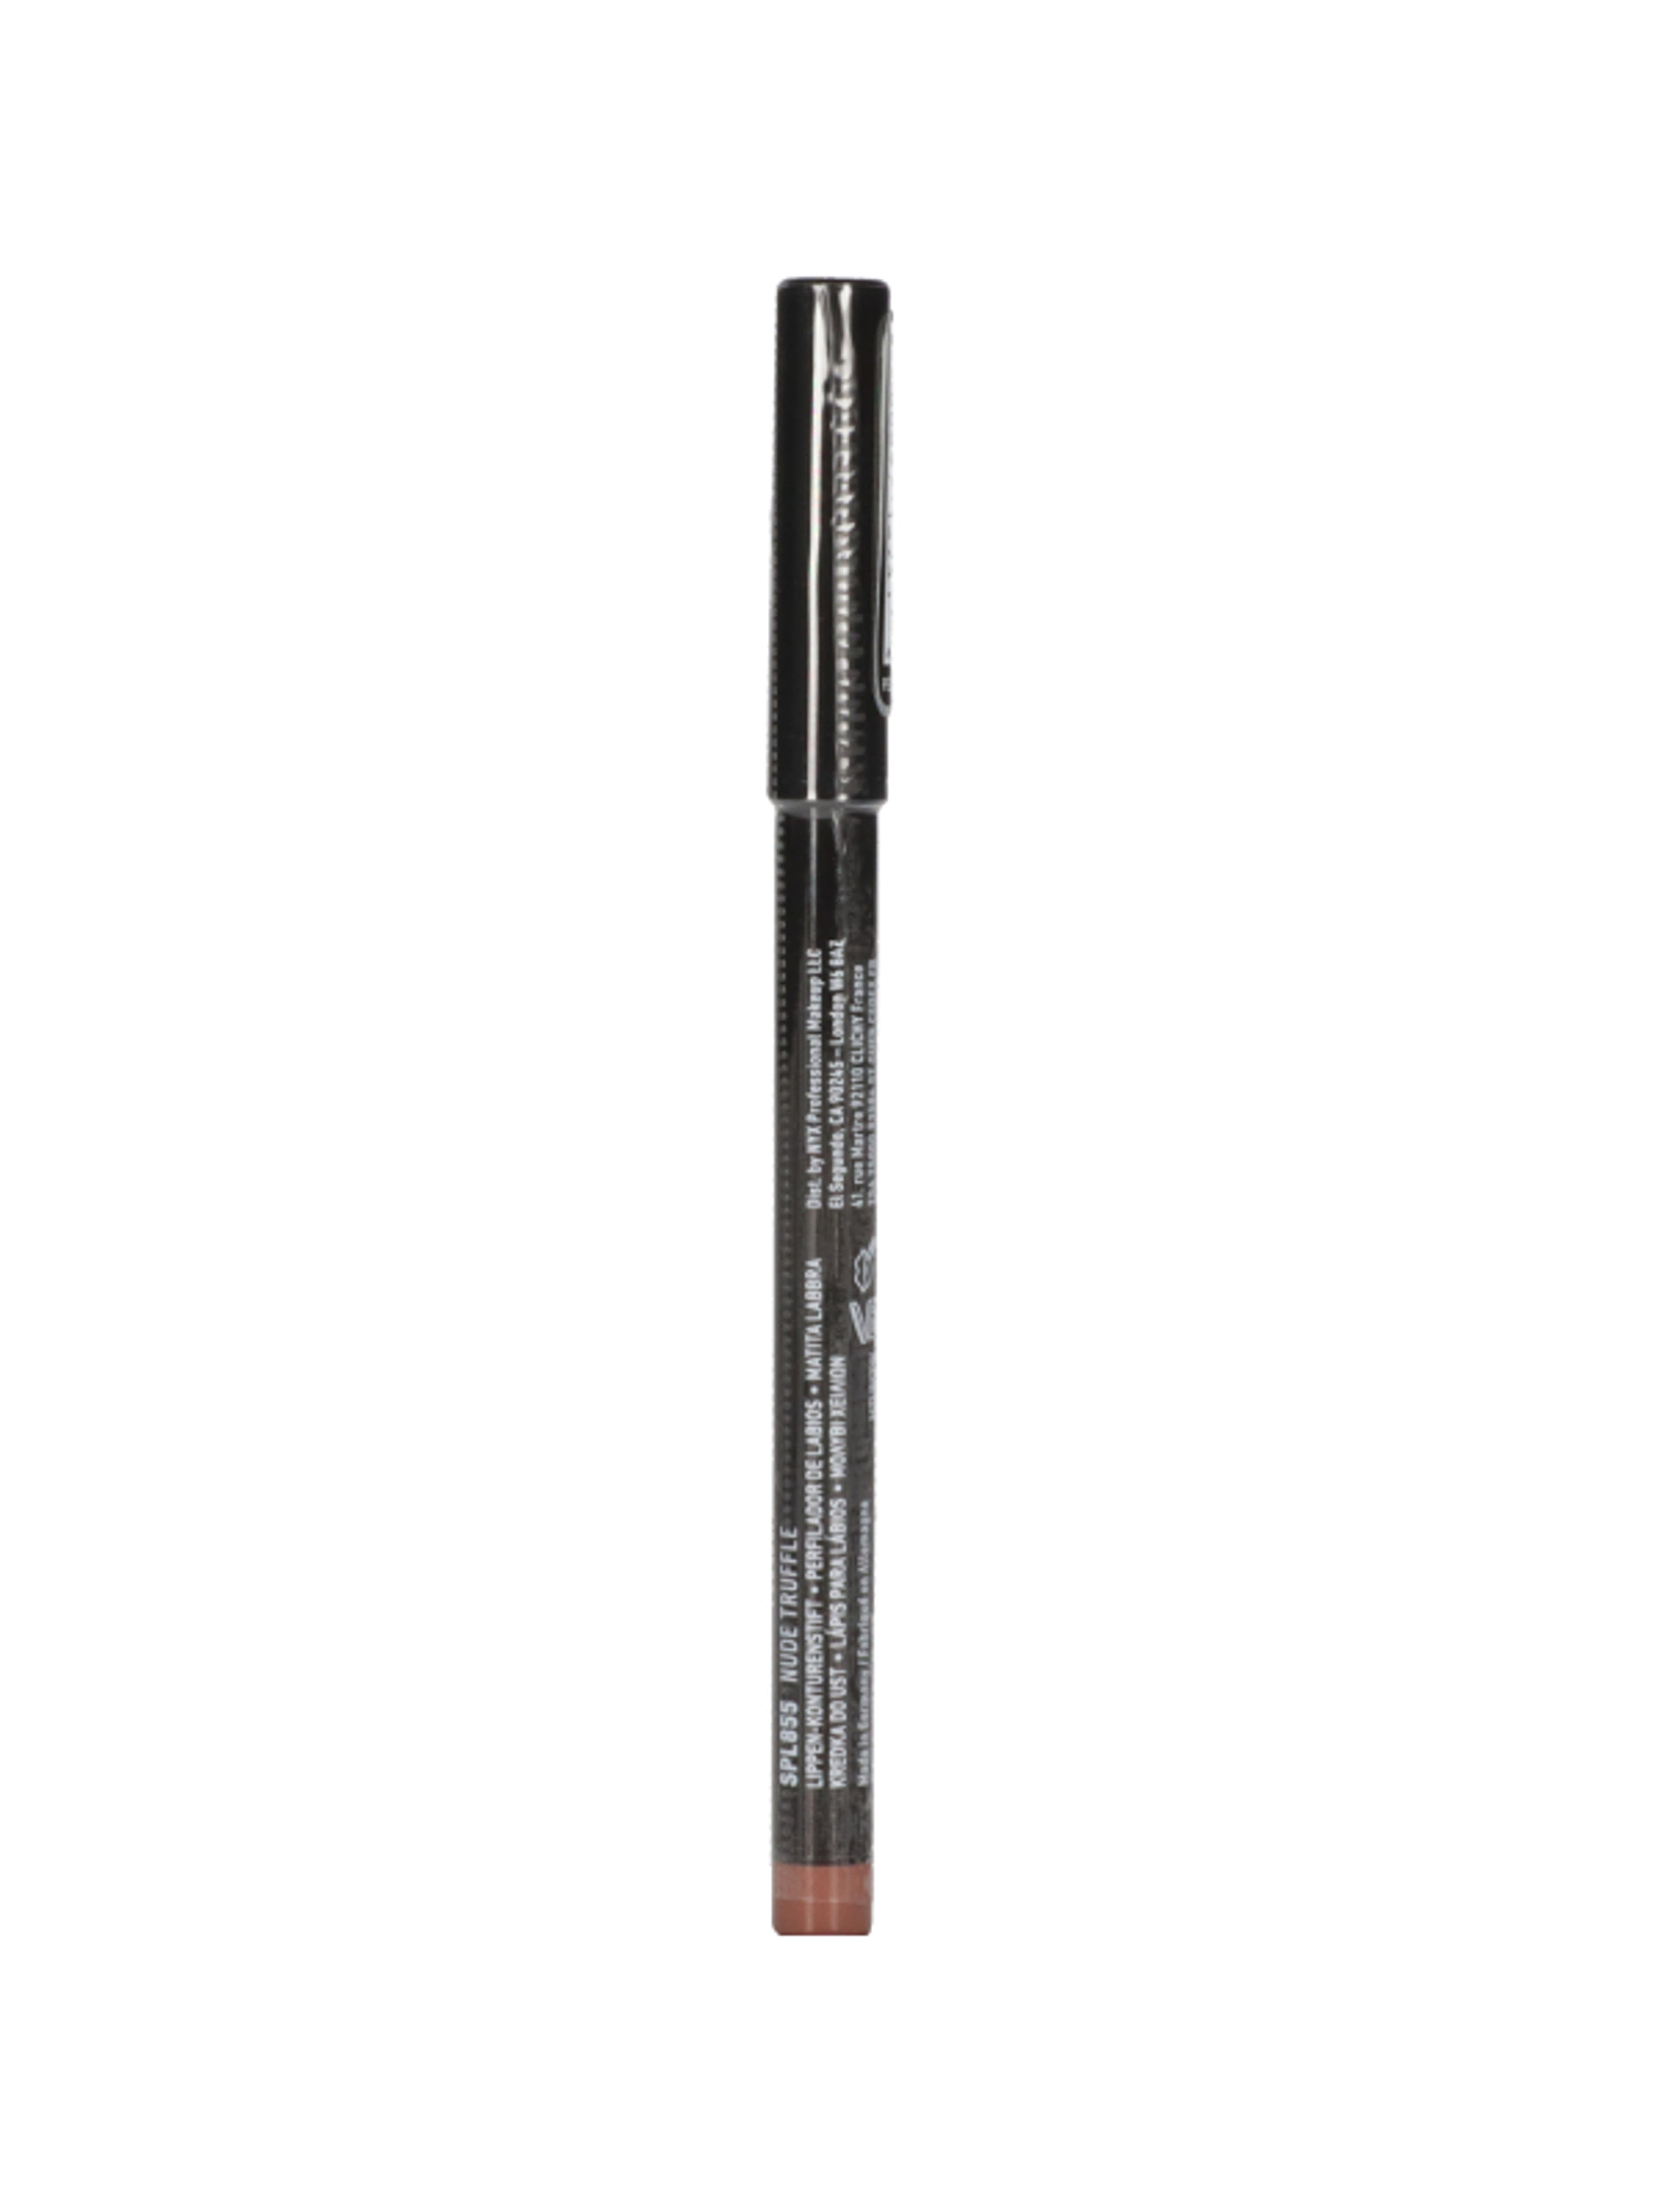 NYX Professional Makeup Slim Lip Pencil ajakkontúr ceruza, Nude Truffle - 1 db-5